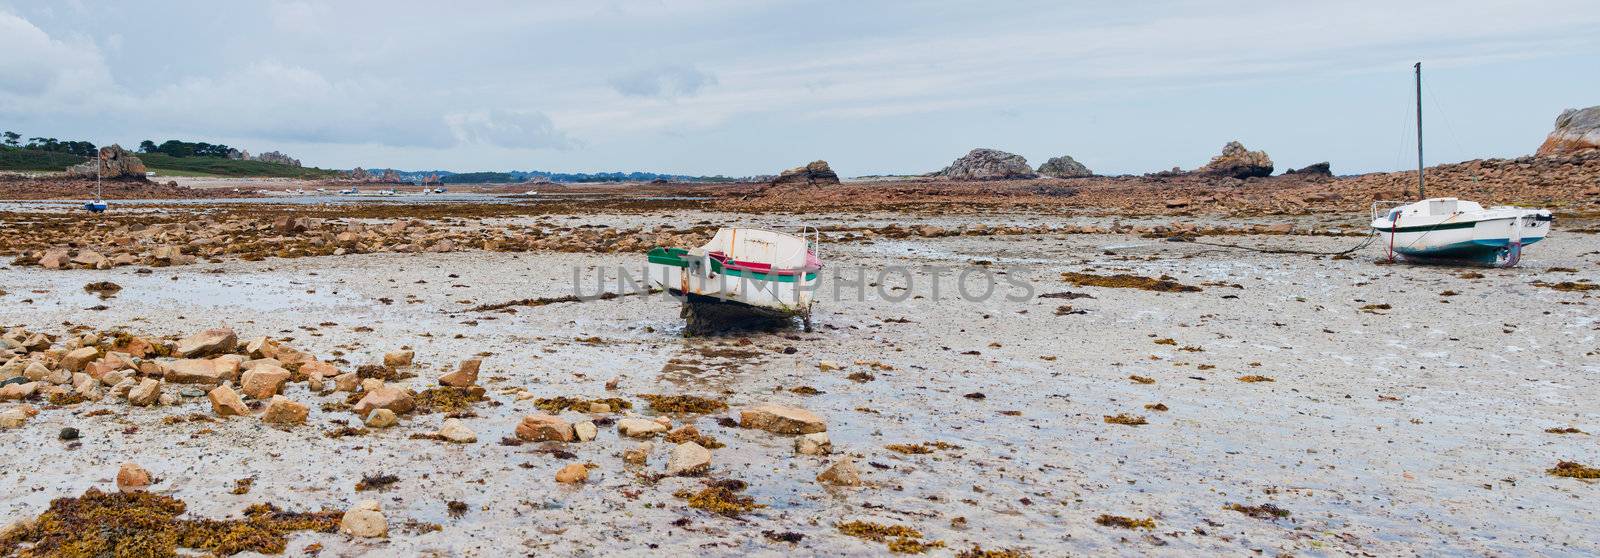 Rowboat at low tide cote Rose by maxoliki